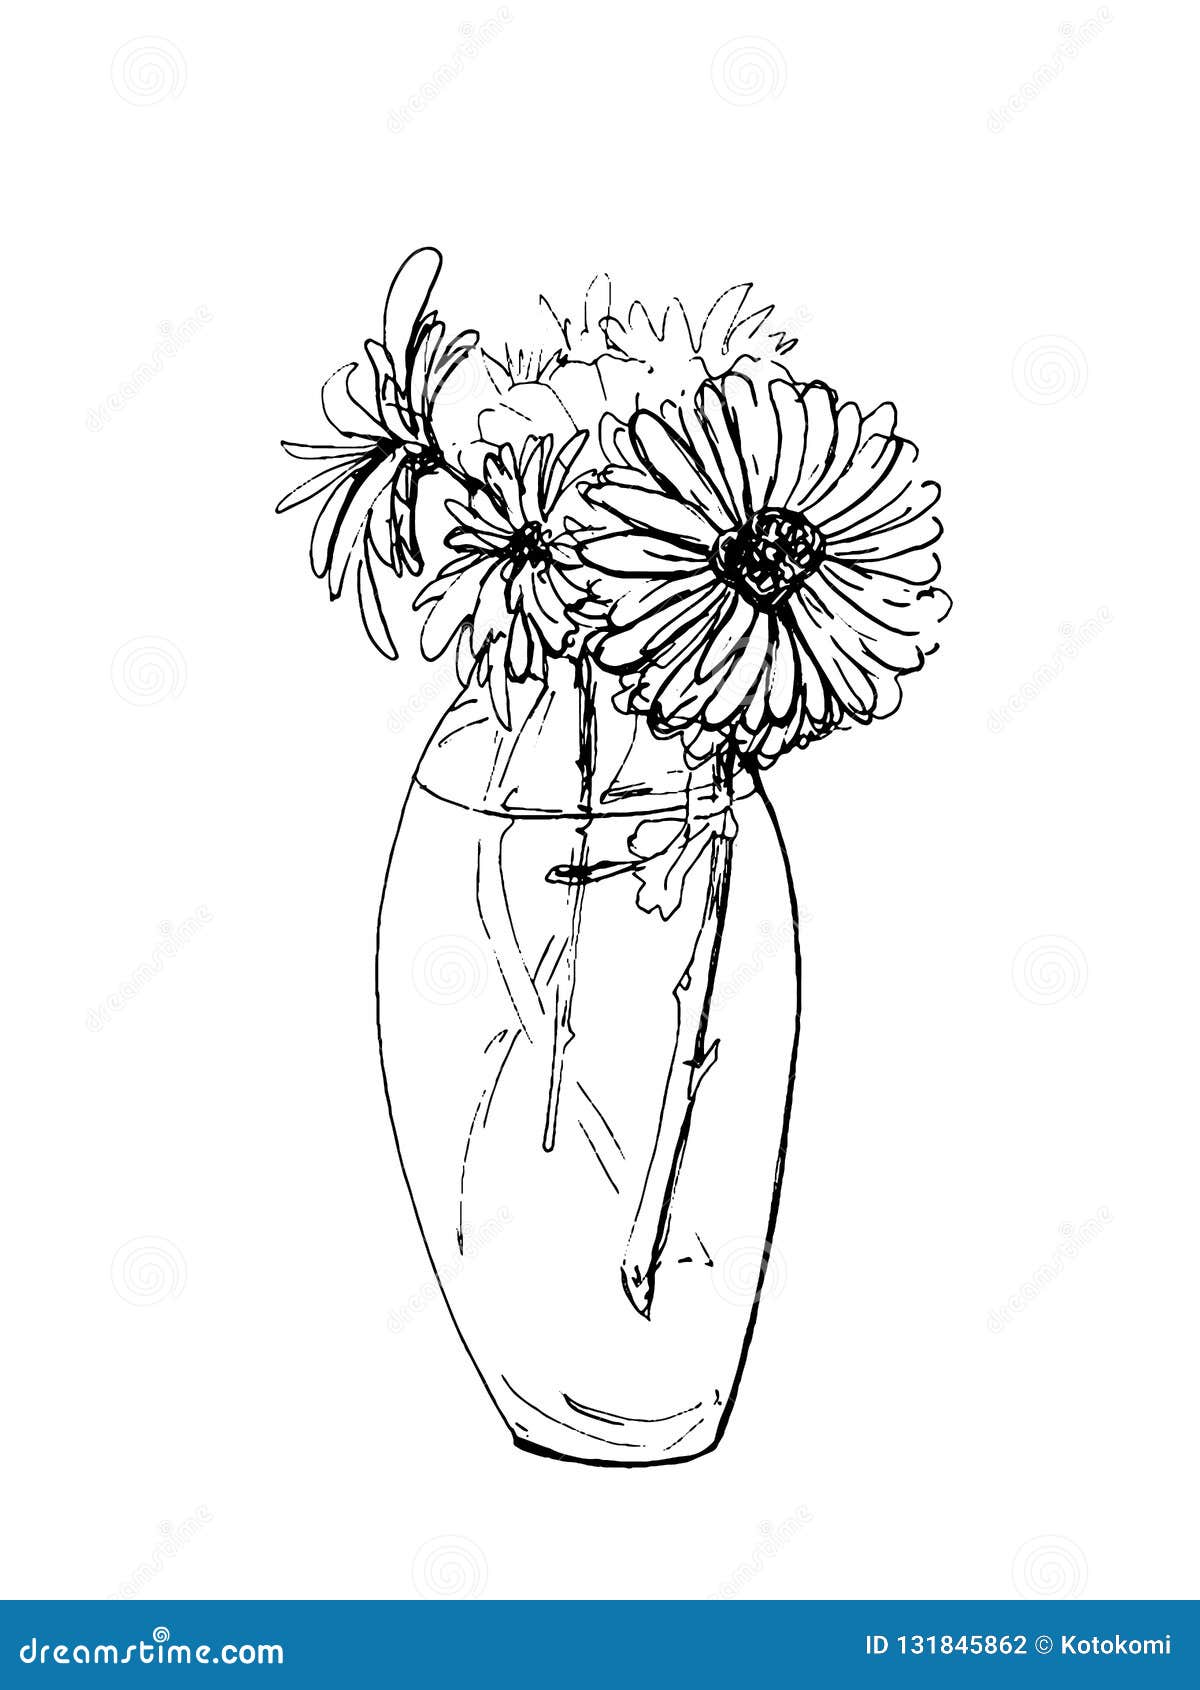 Share 75+ pen sketches of flowers - in.eteachers